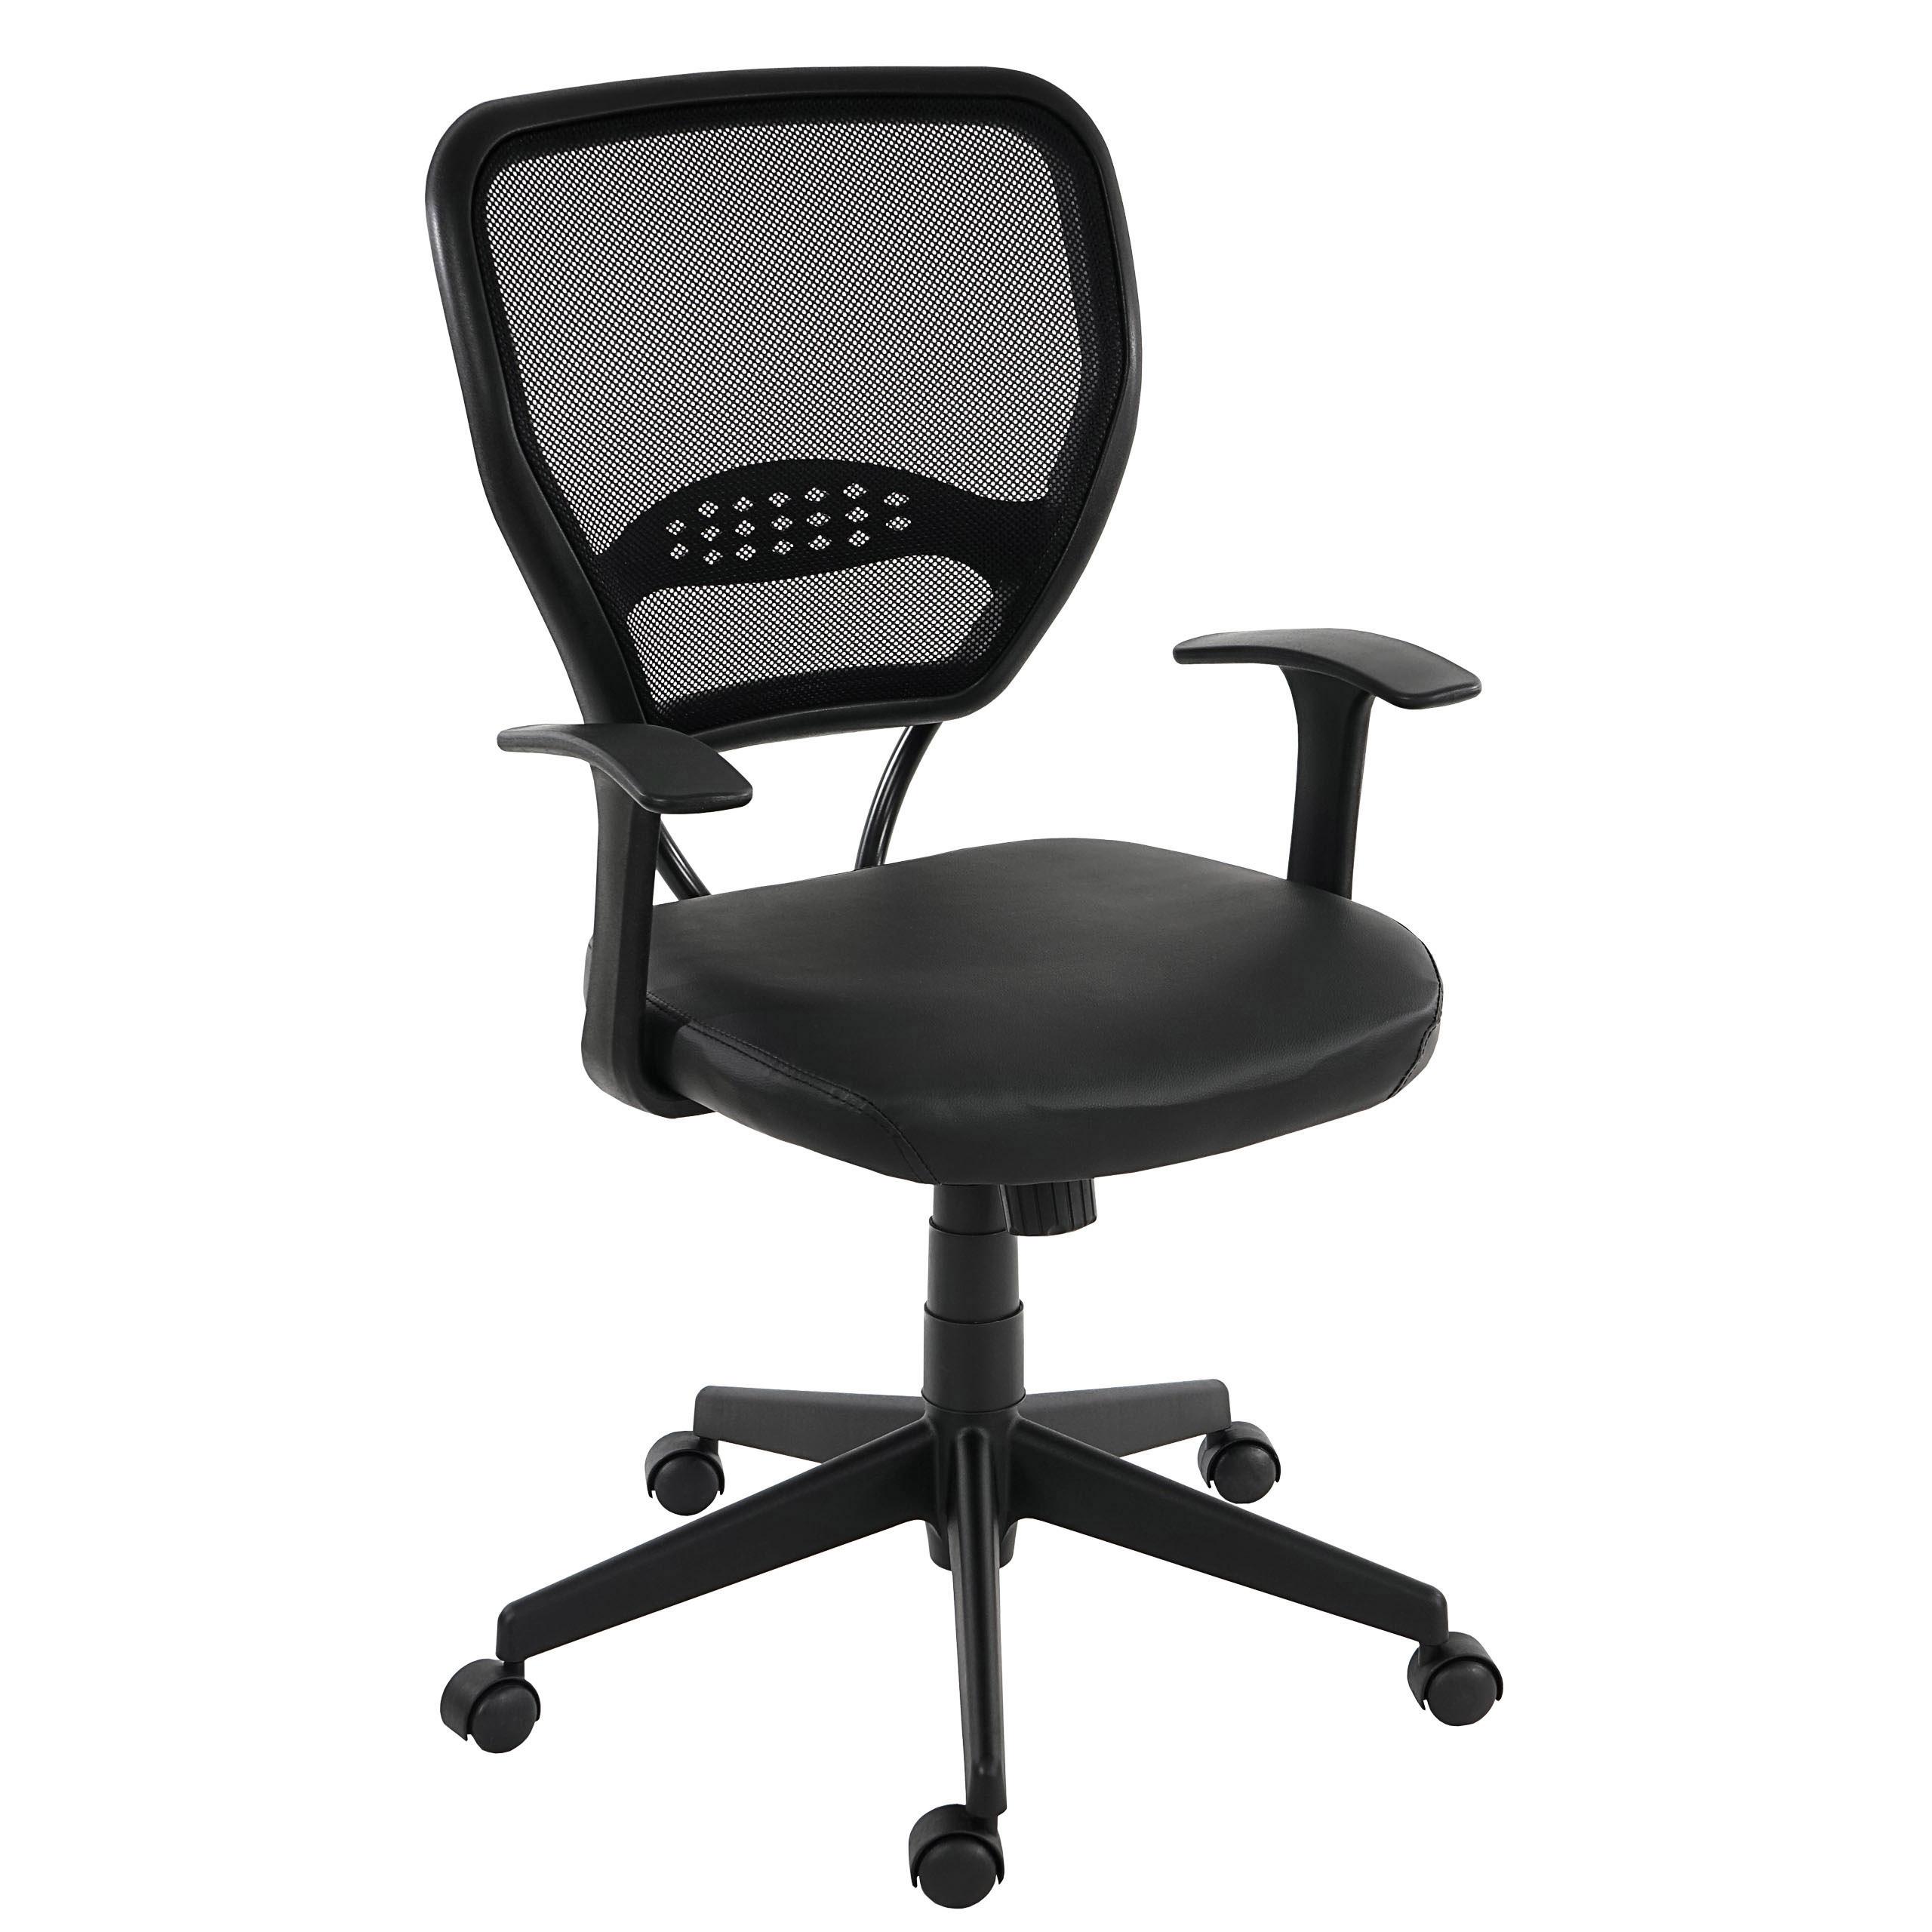 XXL-Bürostuhl TENOYA LEDER, bequeme Sitzpolsterung, Rückenlehne mit Netzbezug, Farbe Schwarz